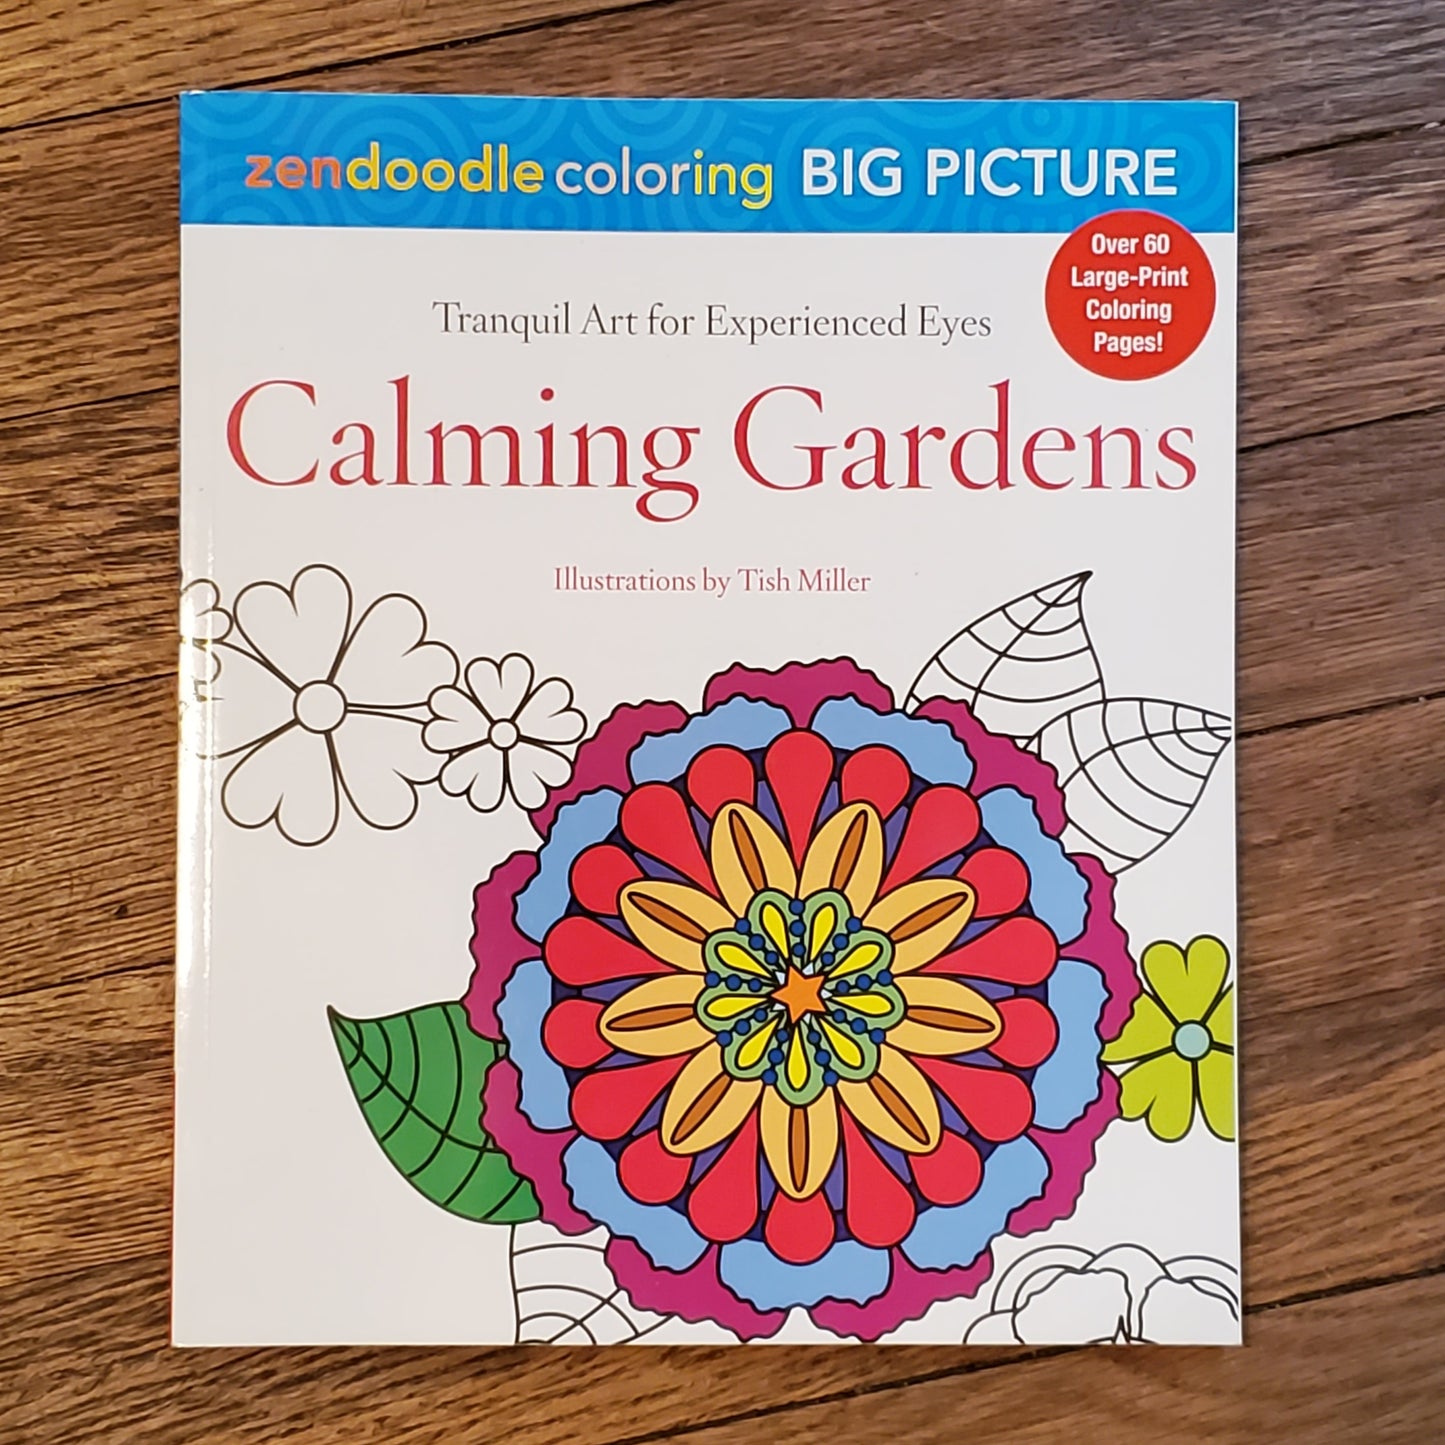 Calming Gardens Zendoodle Coloring (Big Picture)